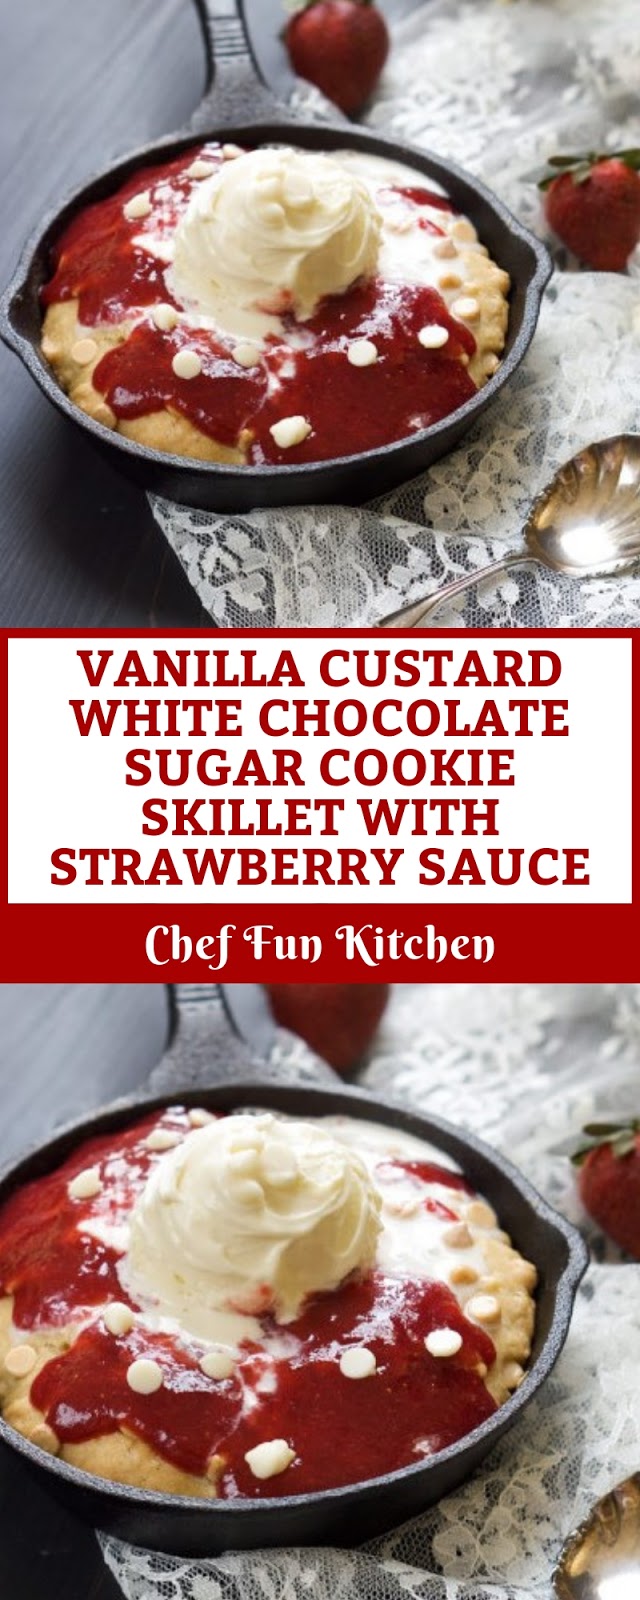 VANILLA CUSTARD WHITE CHOCOLATE SUGAR COOKIE SKILLET WITH STRAWBERRY SAUCE